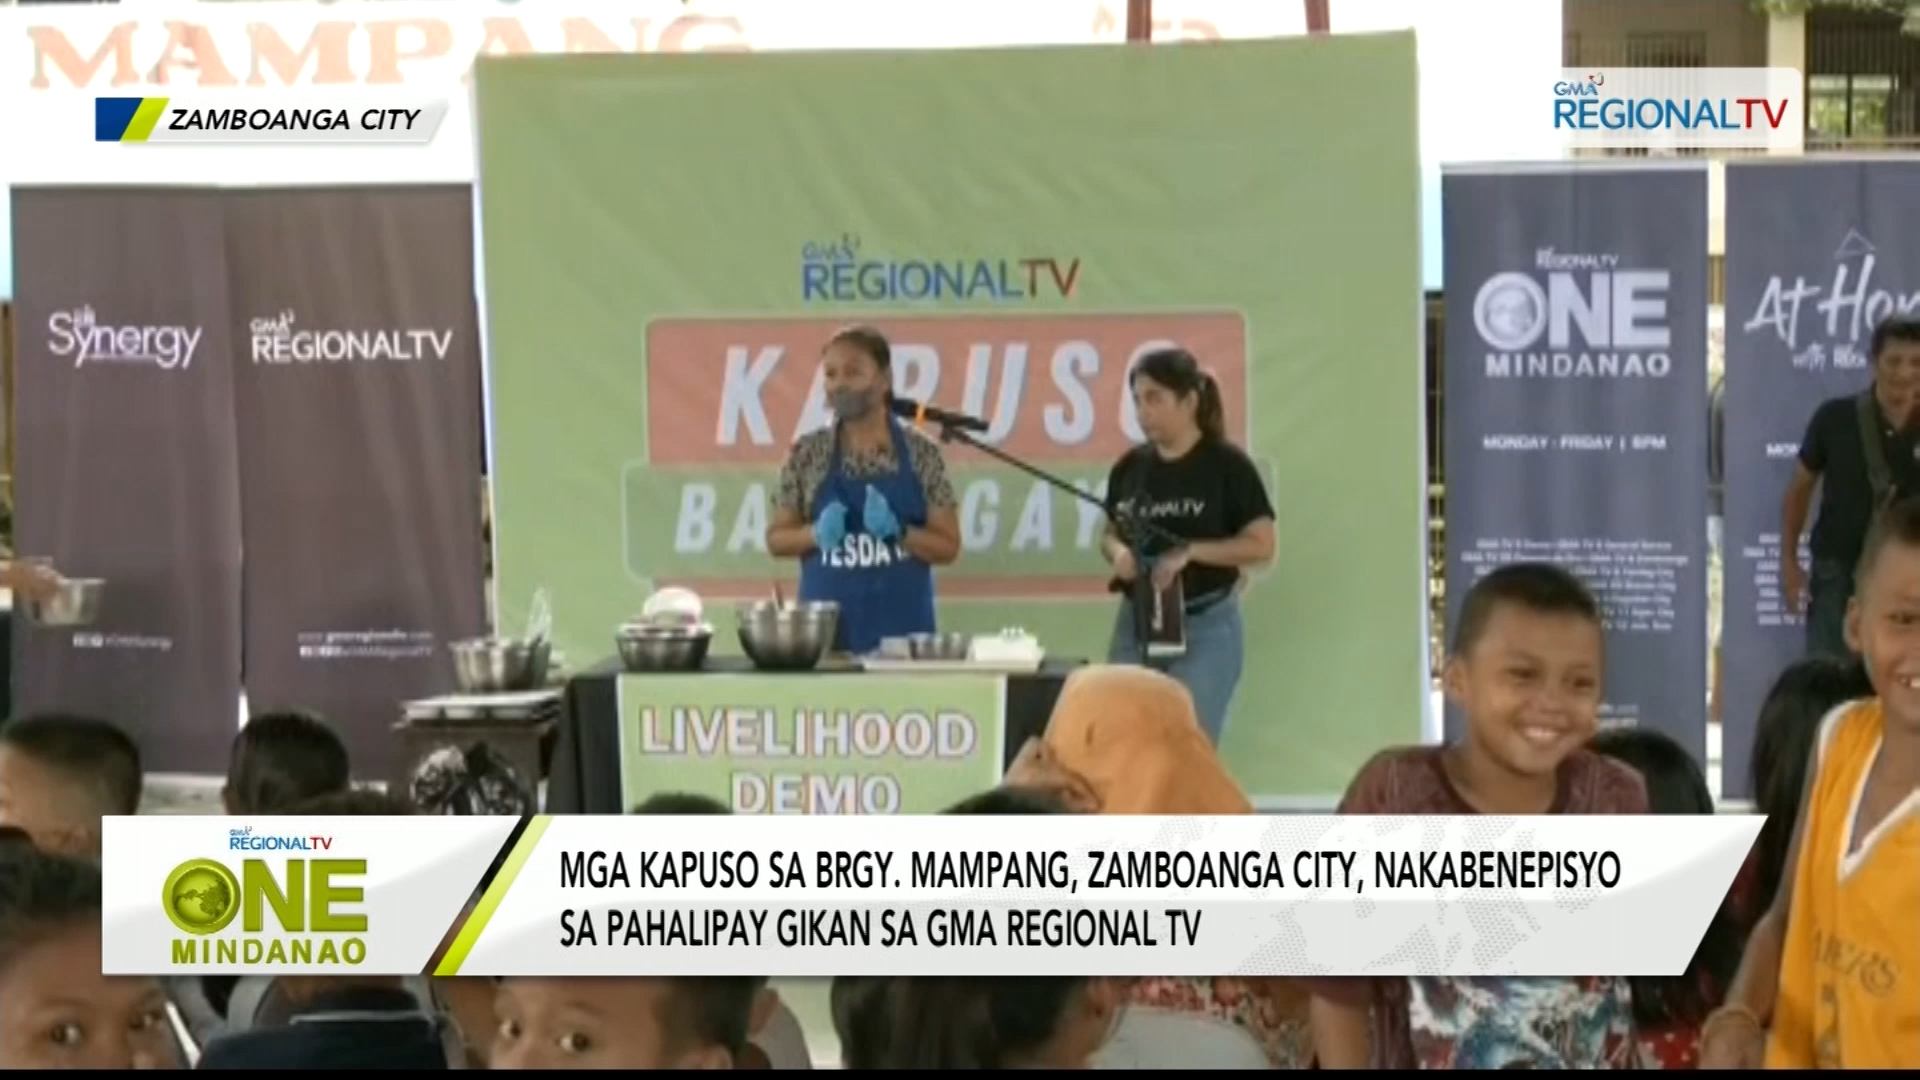 One Mindanao Kapuso Barangayan One Mindanao Gma Regional Tv Online Home Of Philippine